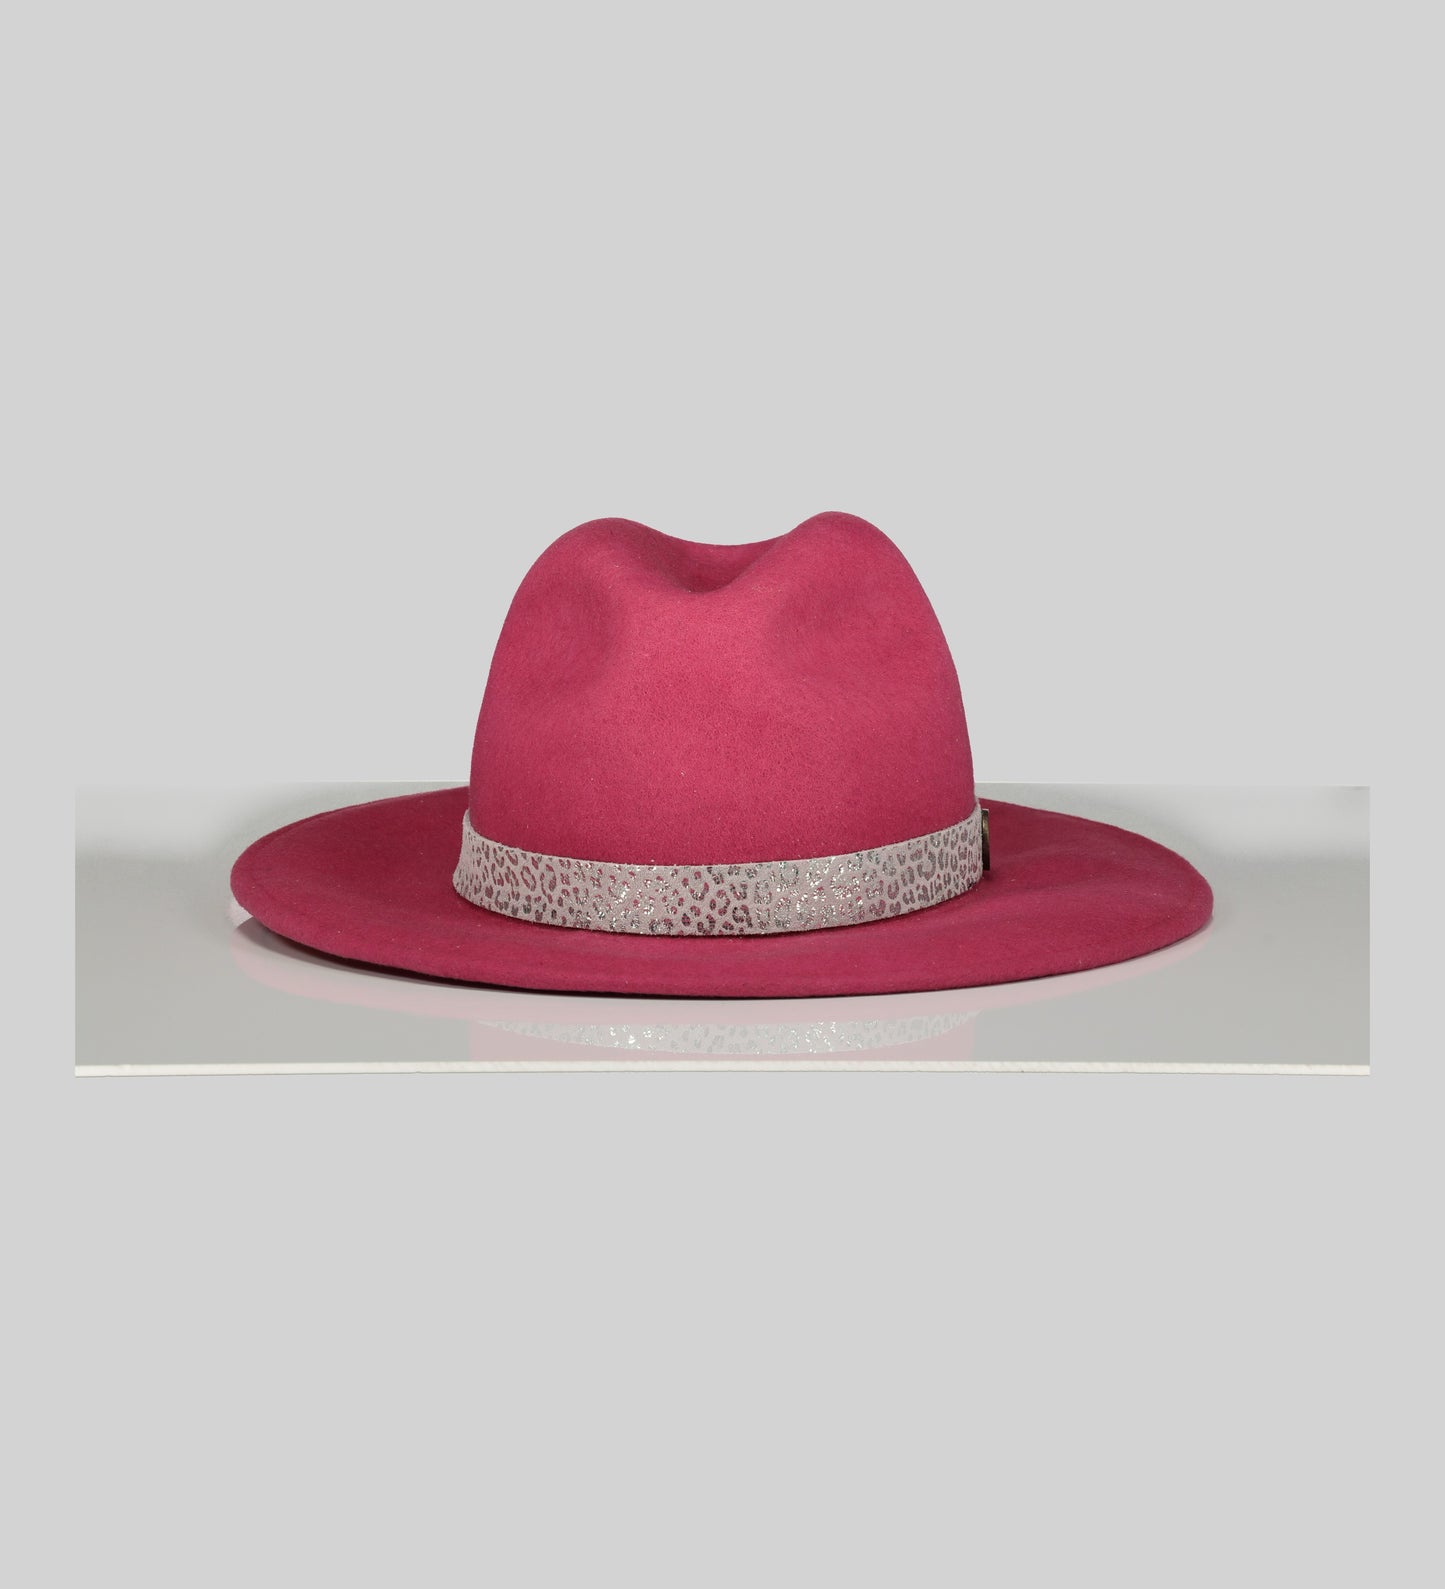 Two Tone Fedora Hat with Animal Print Trim